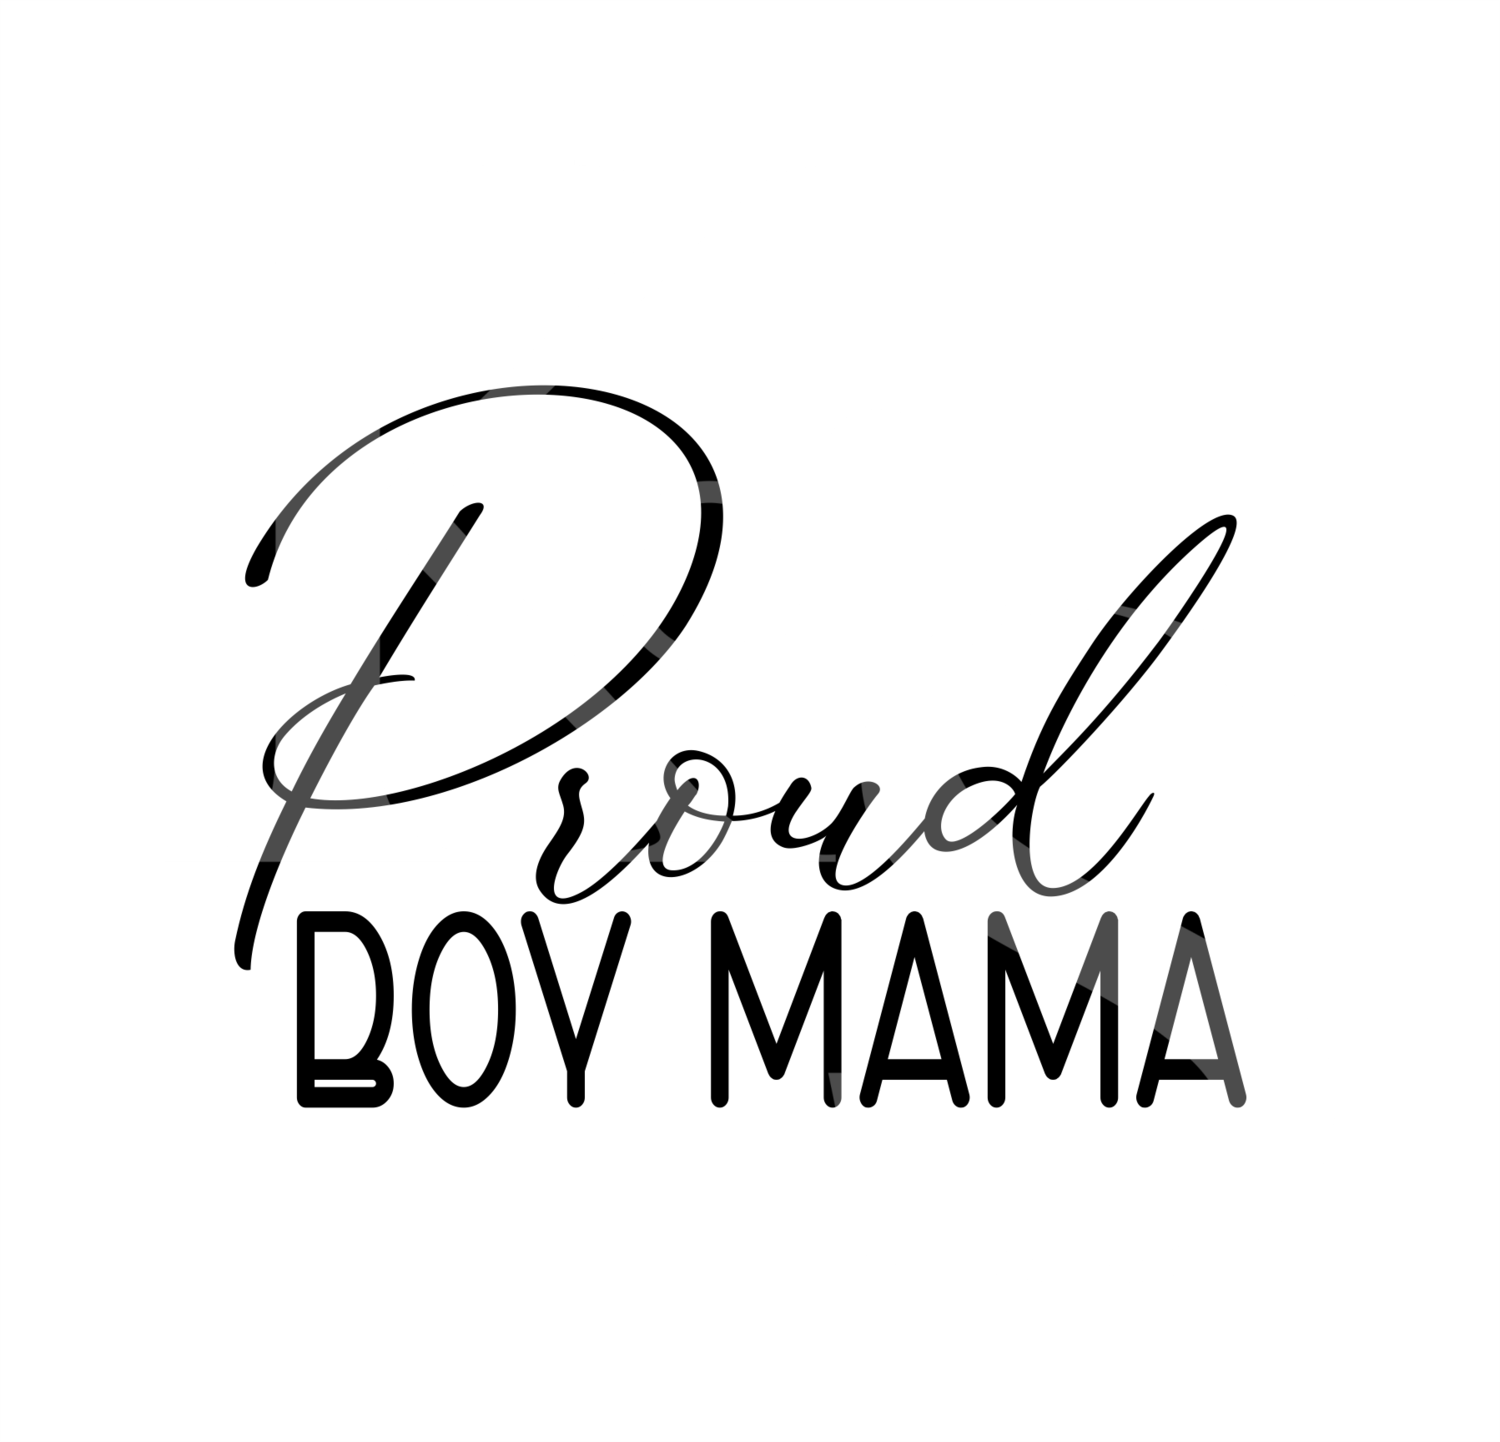 Proud Boy Mama SVG, Mama SVG, Boy Mama SVG, Cute mom SVG, Mothers Day SVG